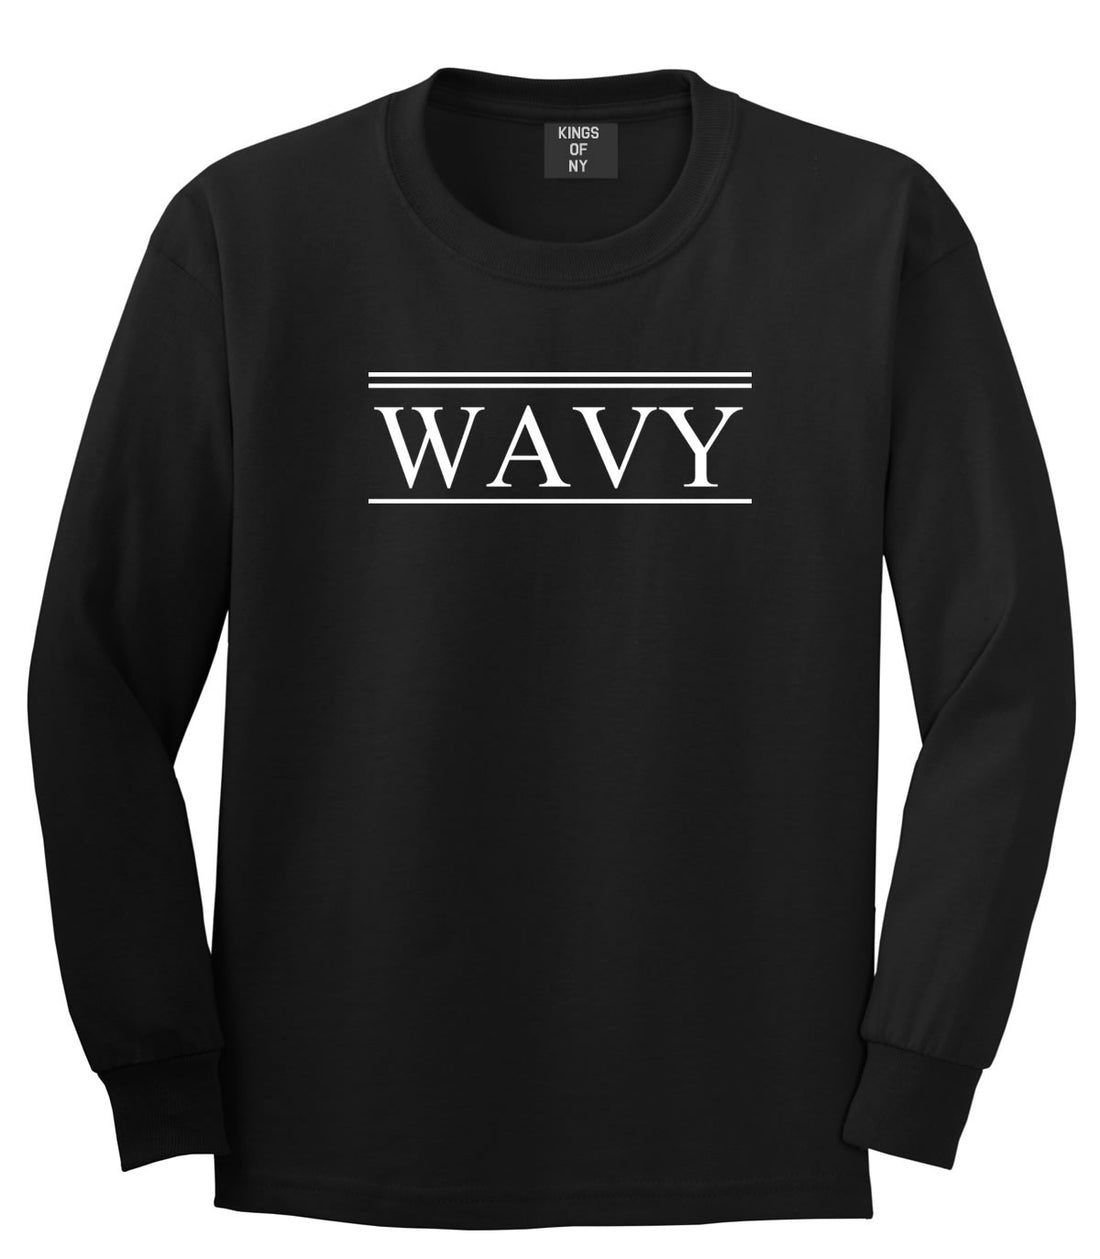 Wavy Harlem Long Sleeve T-Shirt in Black By Kings Of NY